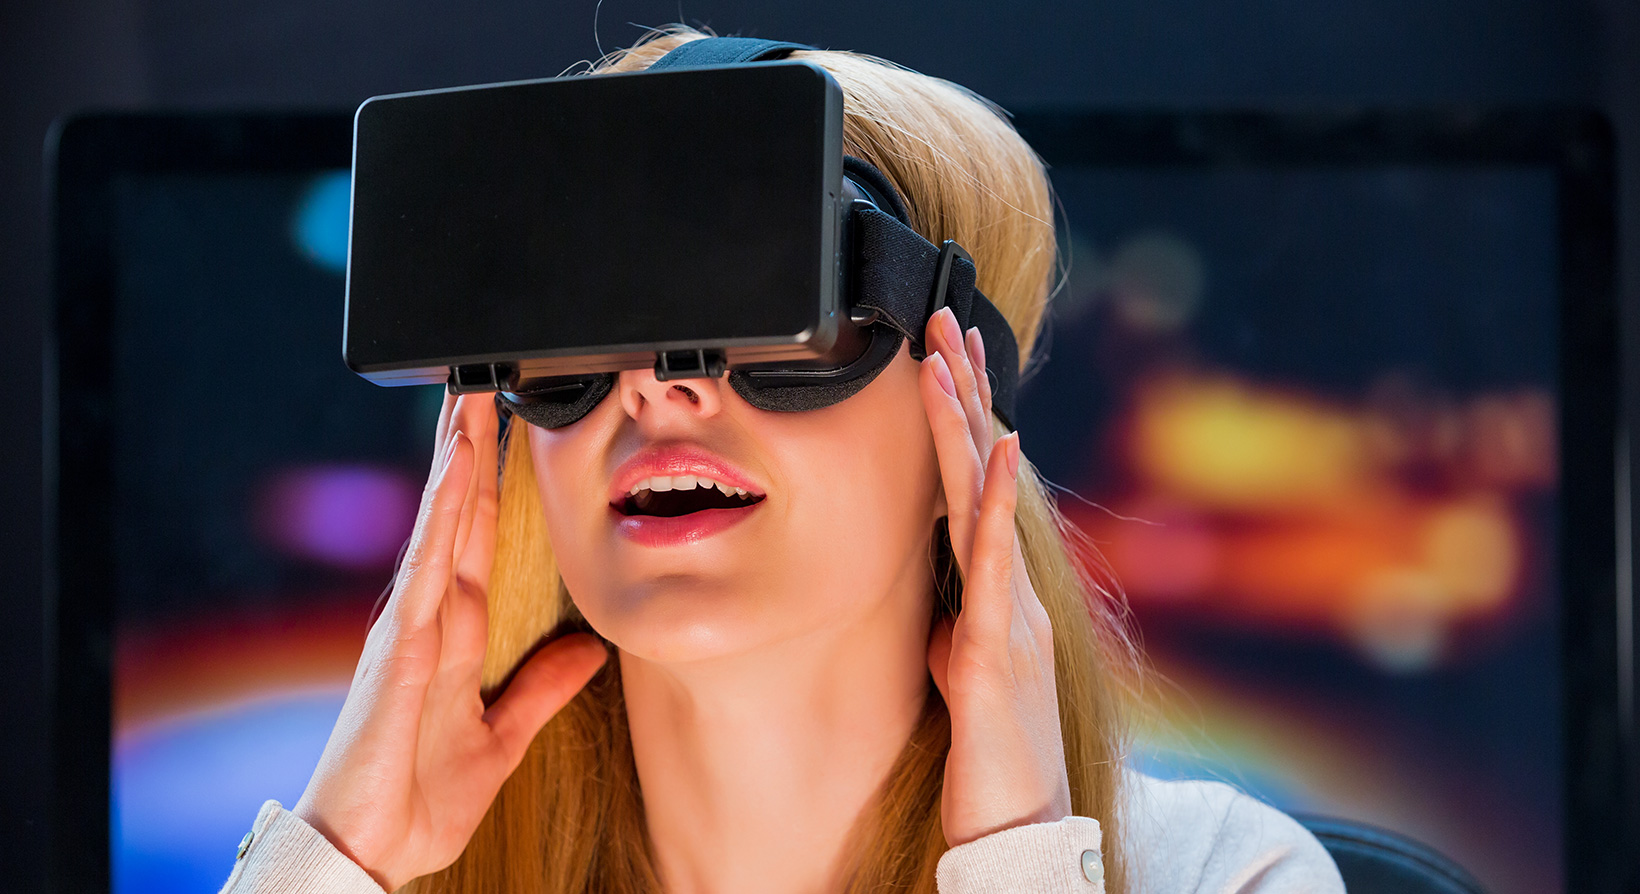 blonde woman trying Virtual Reality headset